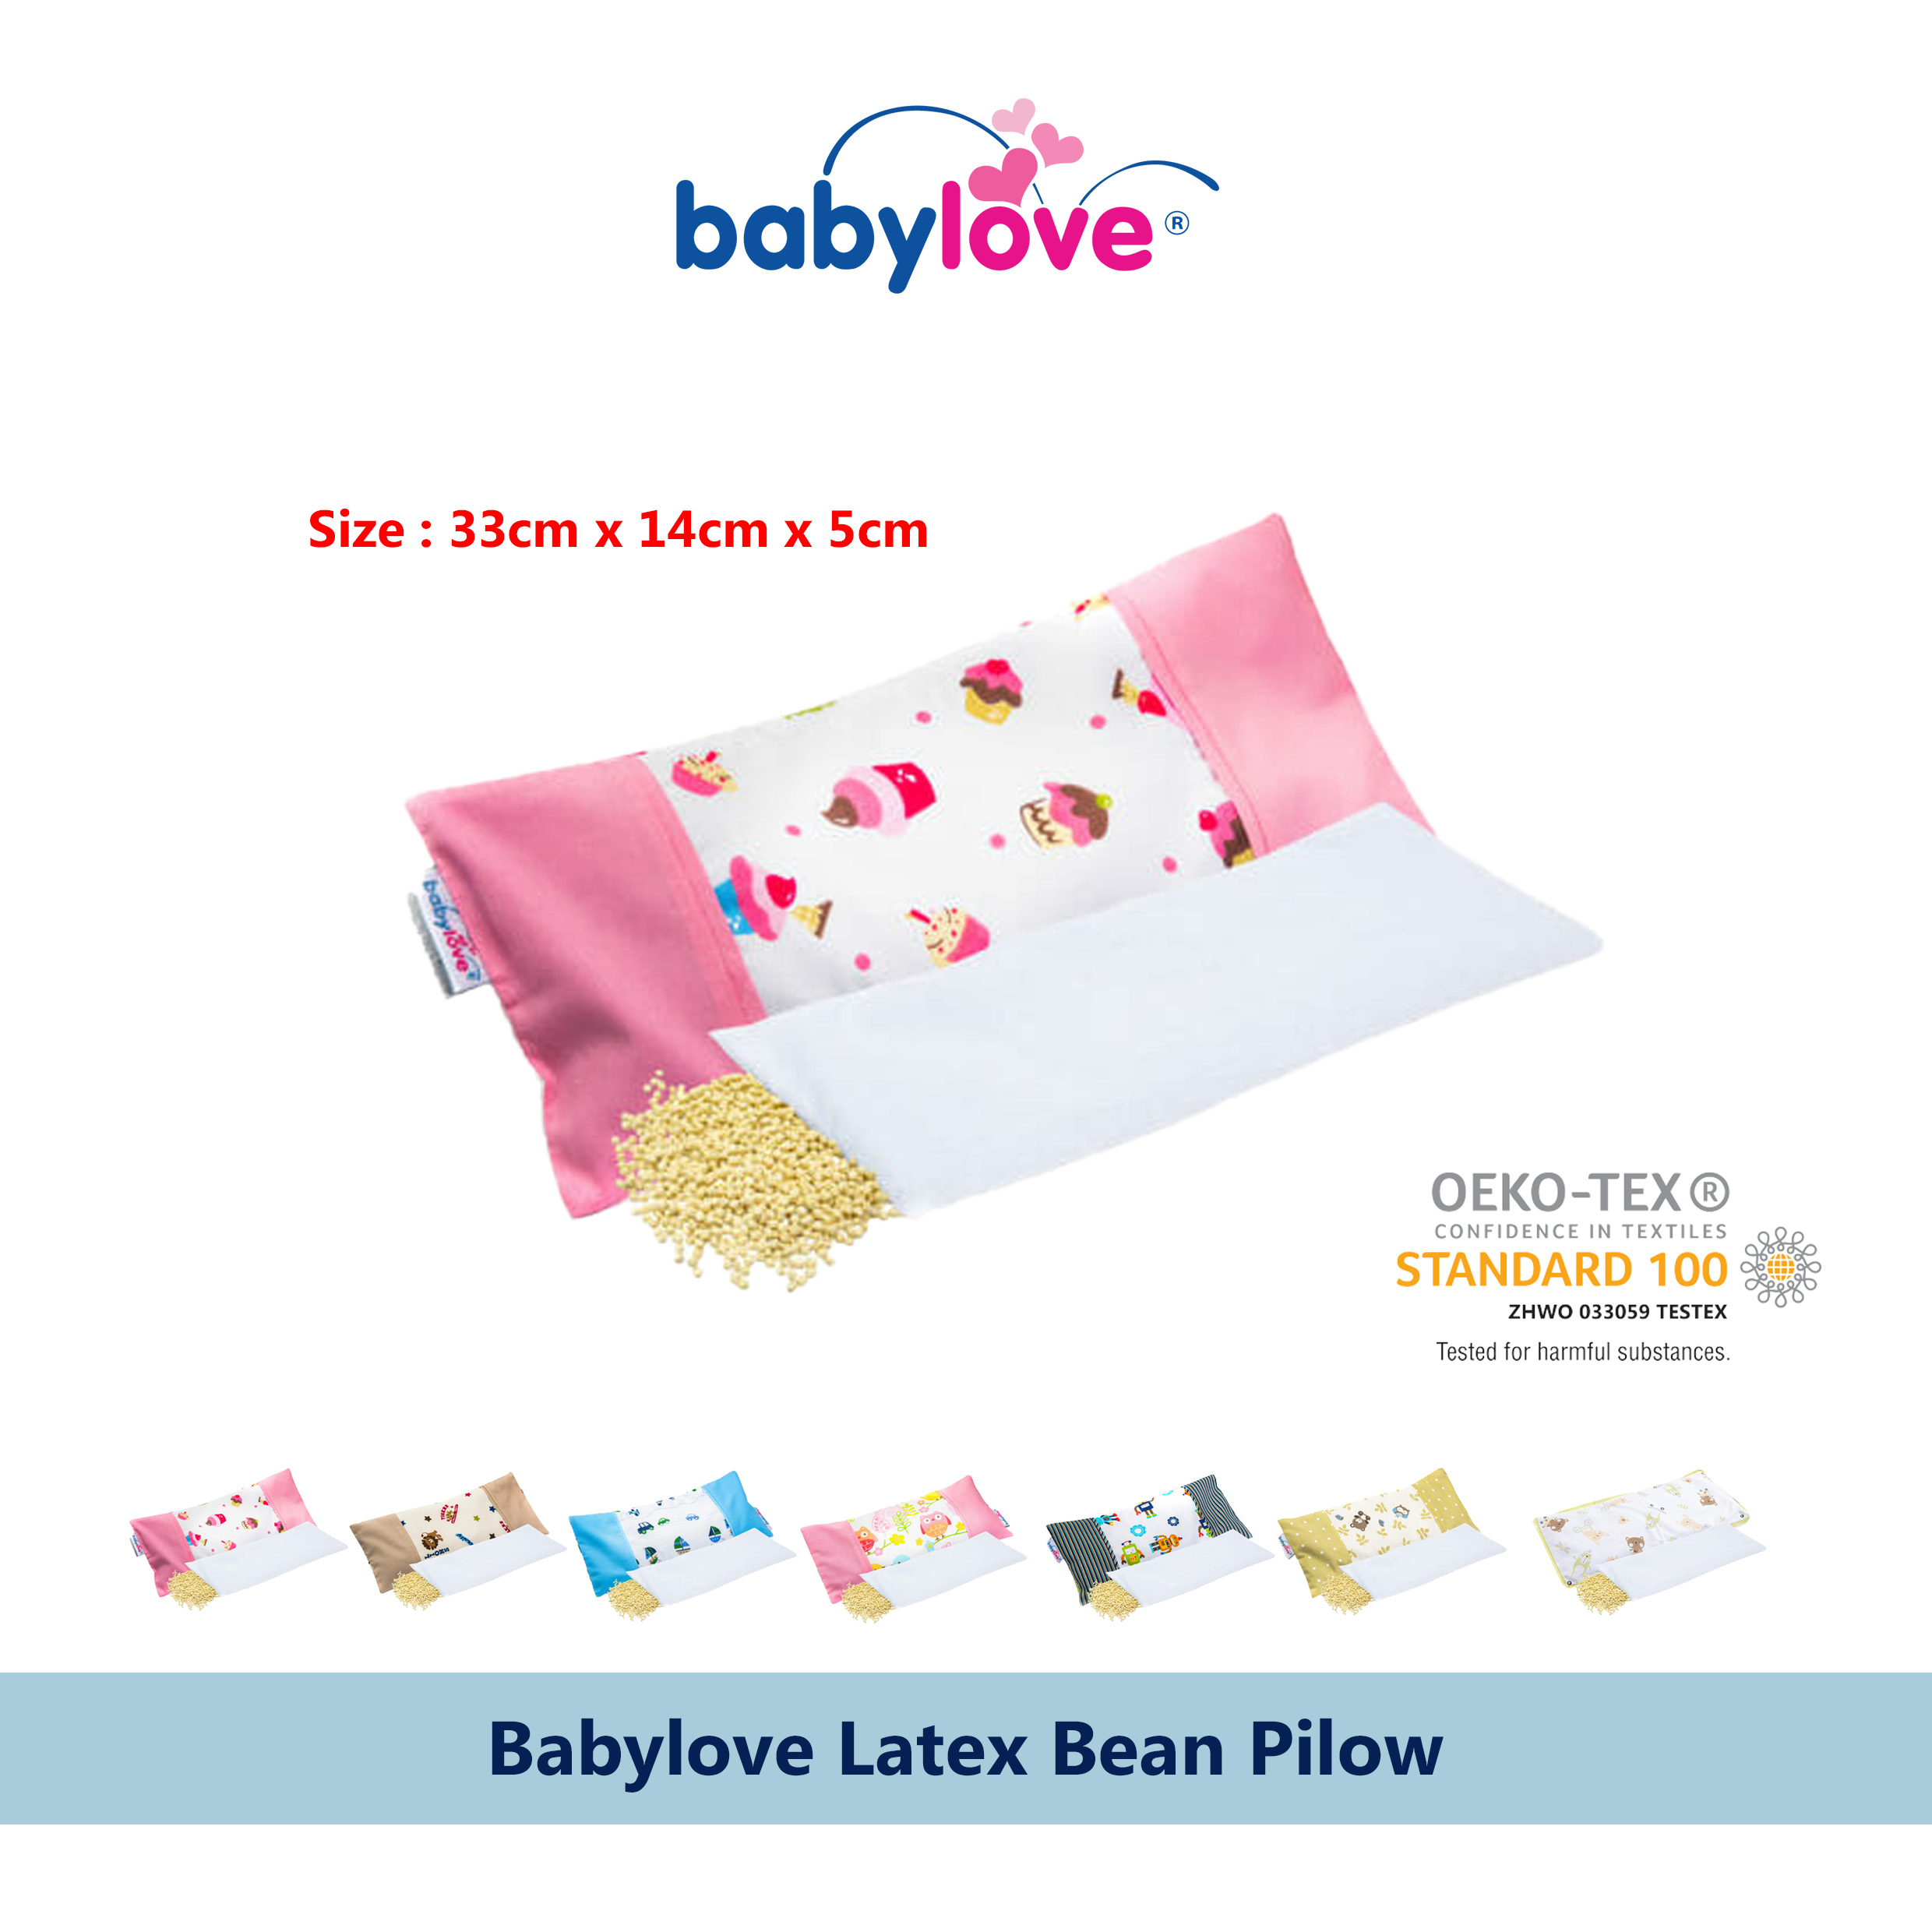 Babylove Baby Organic Latex Bean Pillow with Pillowcase